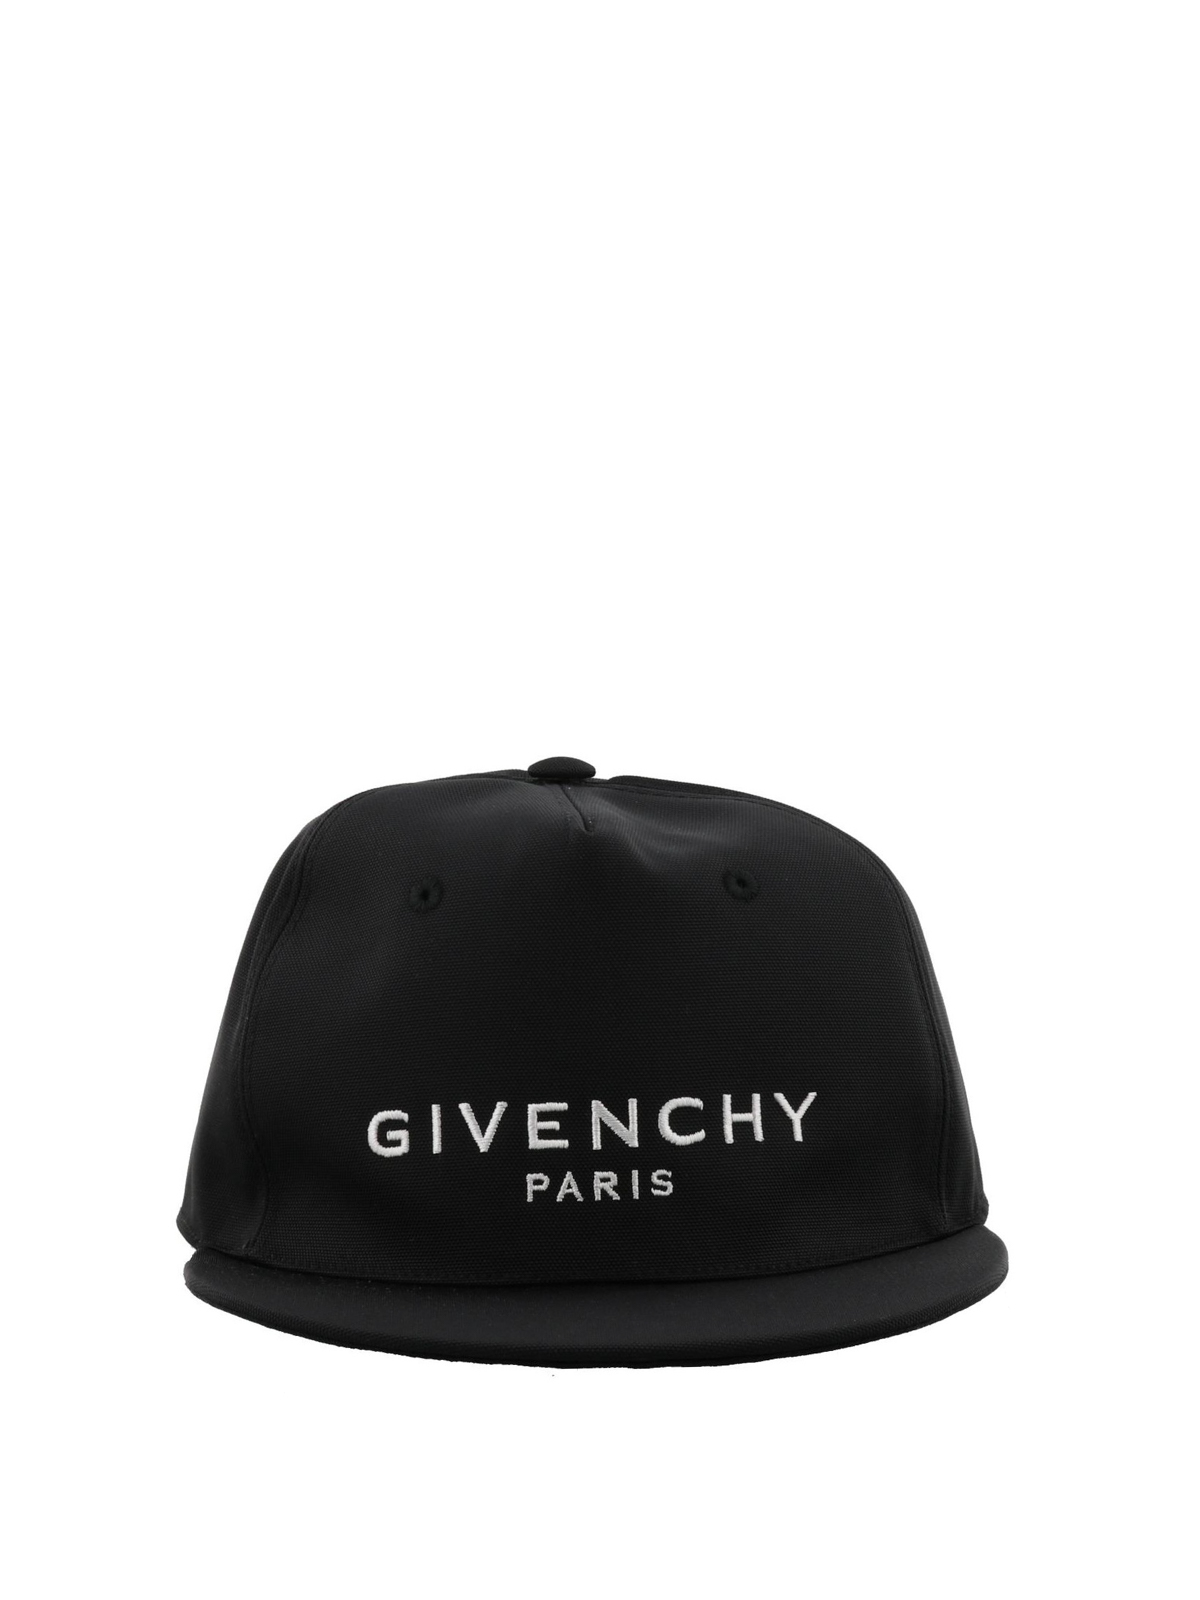 Hats & caps Givenchy - Givenchy Paris embroidery cotton baseball cap ...